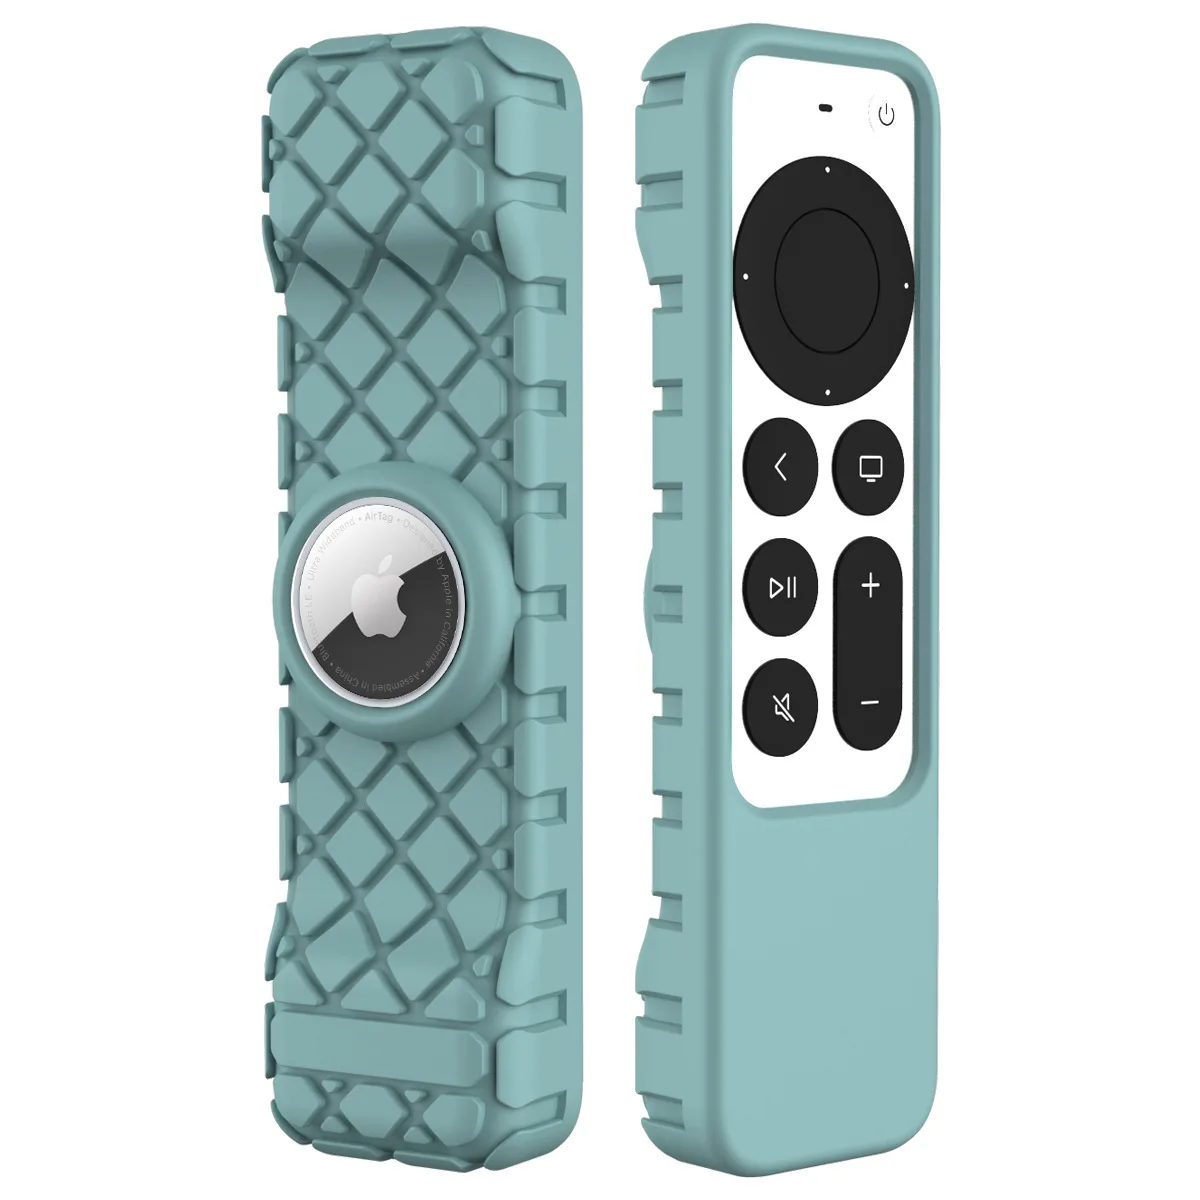 

2021 New Smart TV Remote Control Silicone Case For Apple TV 4K Siri Remote Gen2 2in1 Silicon Cover For Airtag, 6+ colors